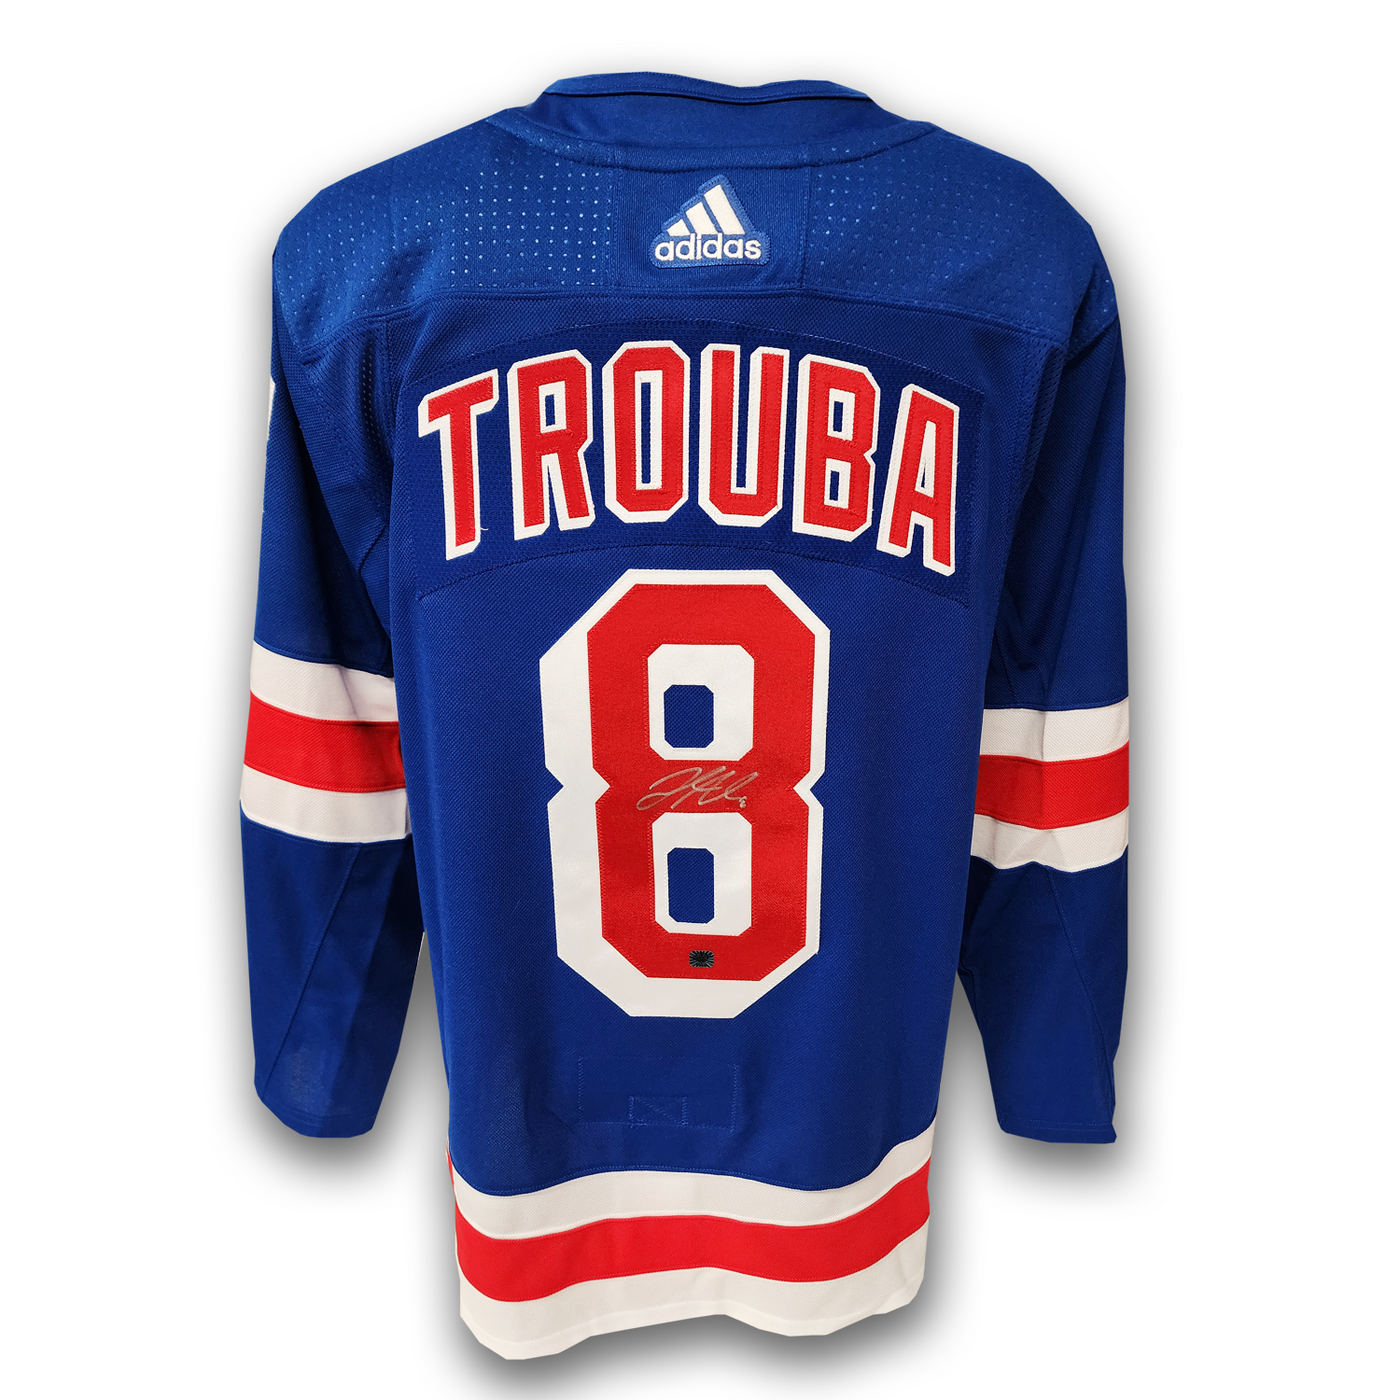 Jacob Trouba New York Rangers Autographed Adidas Jersey